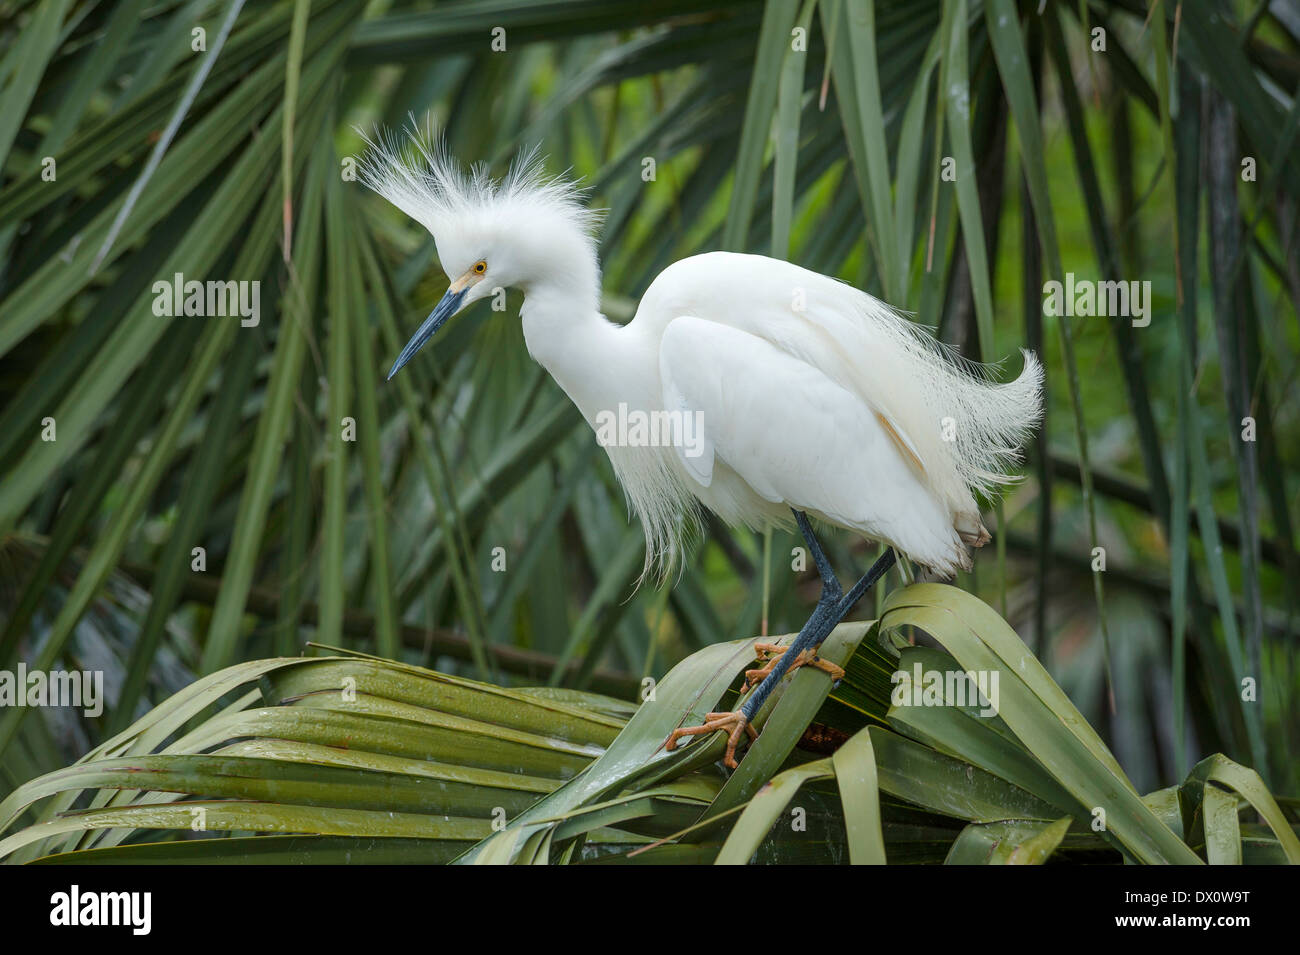 Snowy Egret herausfordernd auf Palmetto Blatt Stockfoto